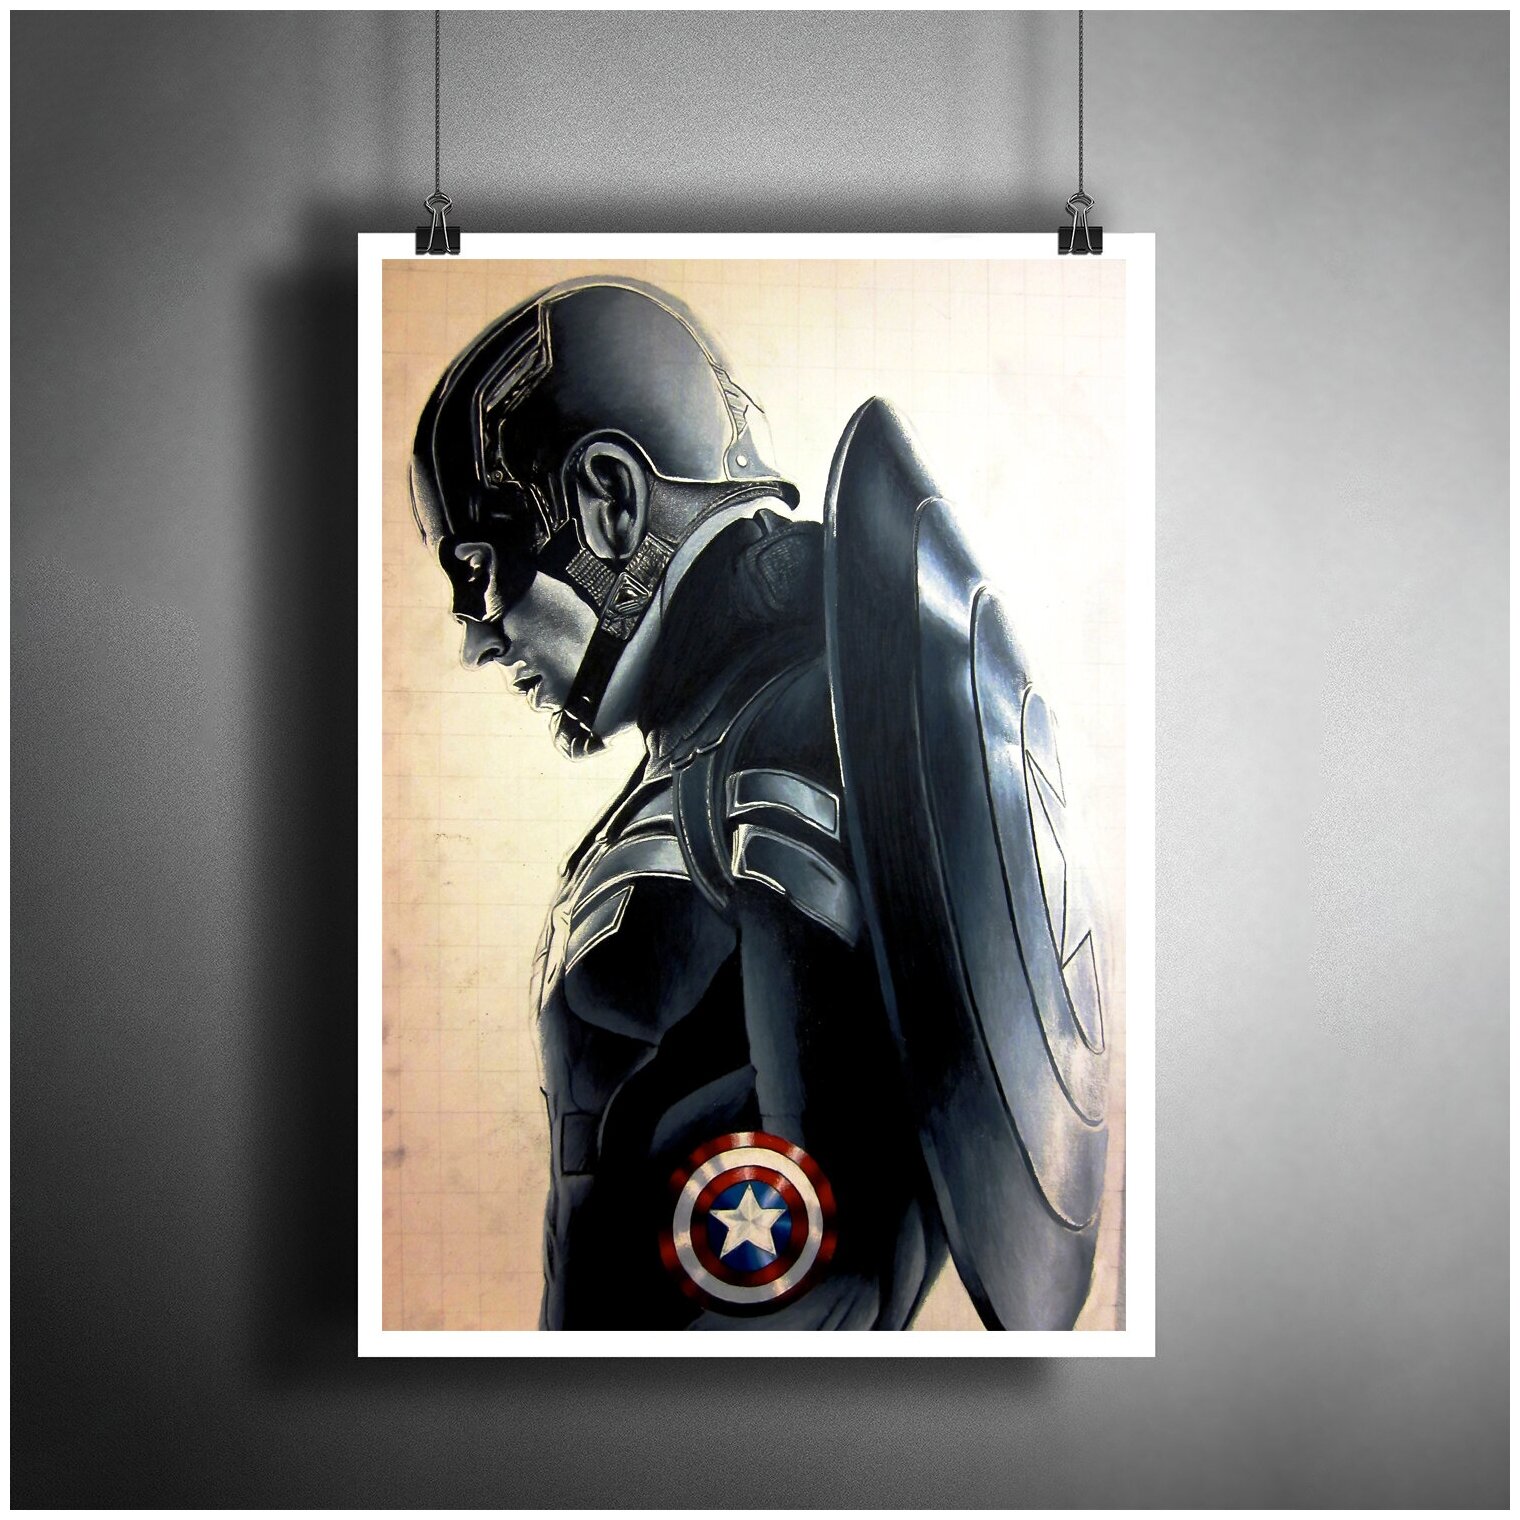 Постер плакат для интерьера "Мстители: Капитан Америка. Марвел"/ Декор дома, офиса, комнаты A3 (297 x 420 мм)